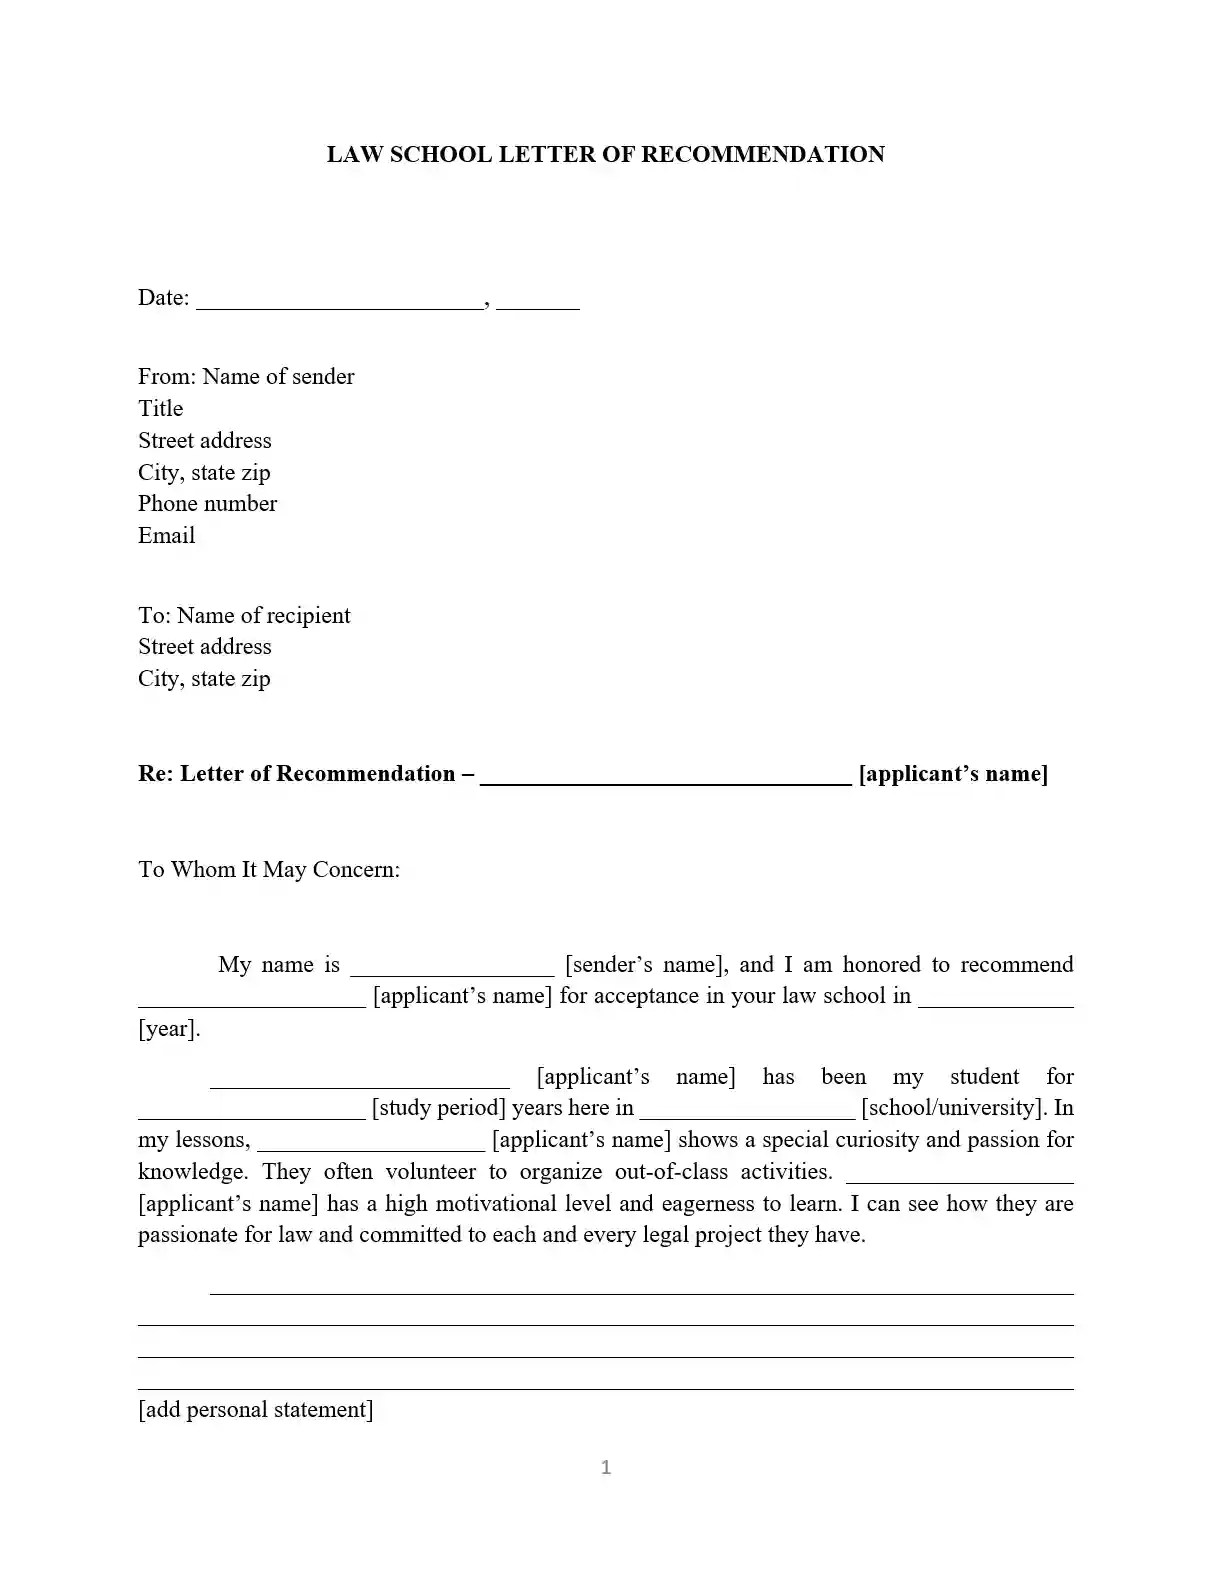 Sample Recommendation Letter For Graduate School Admission